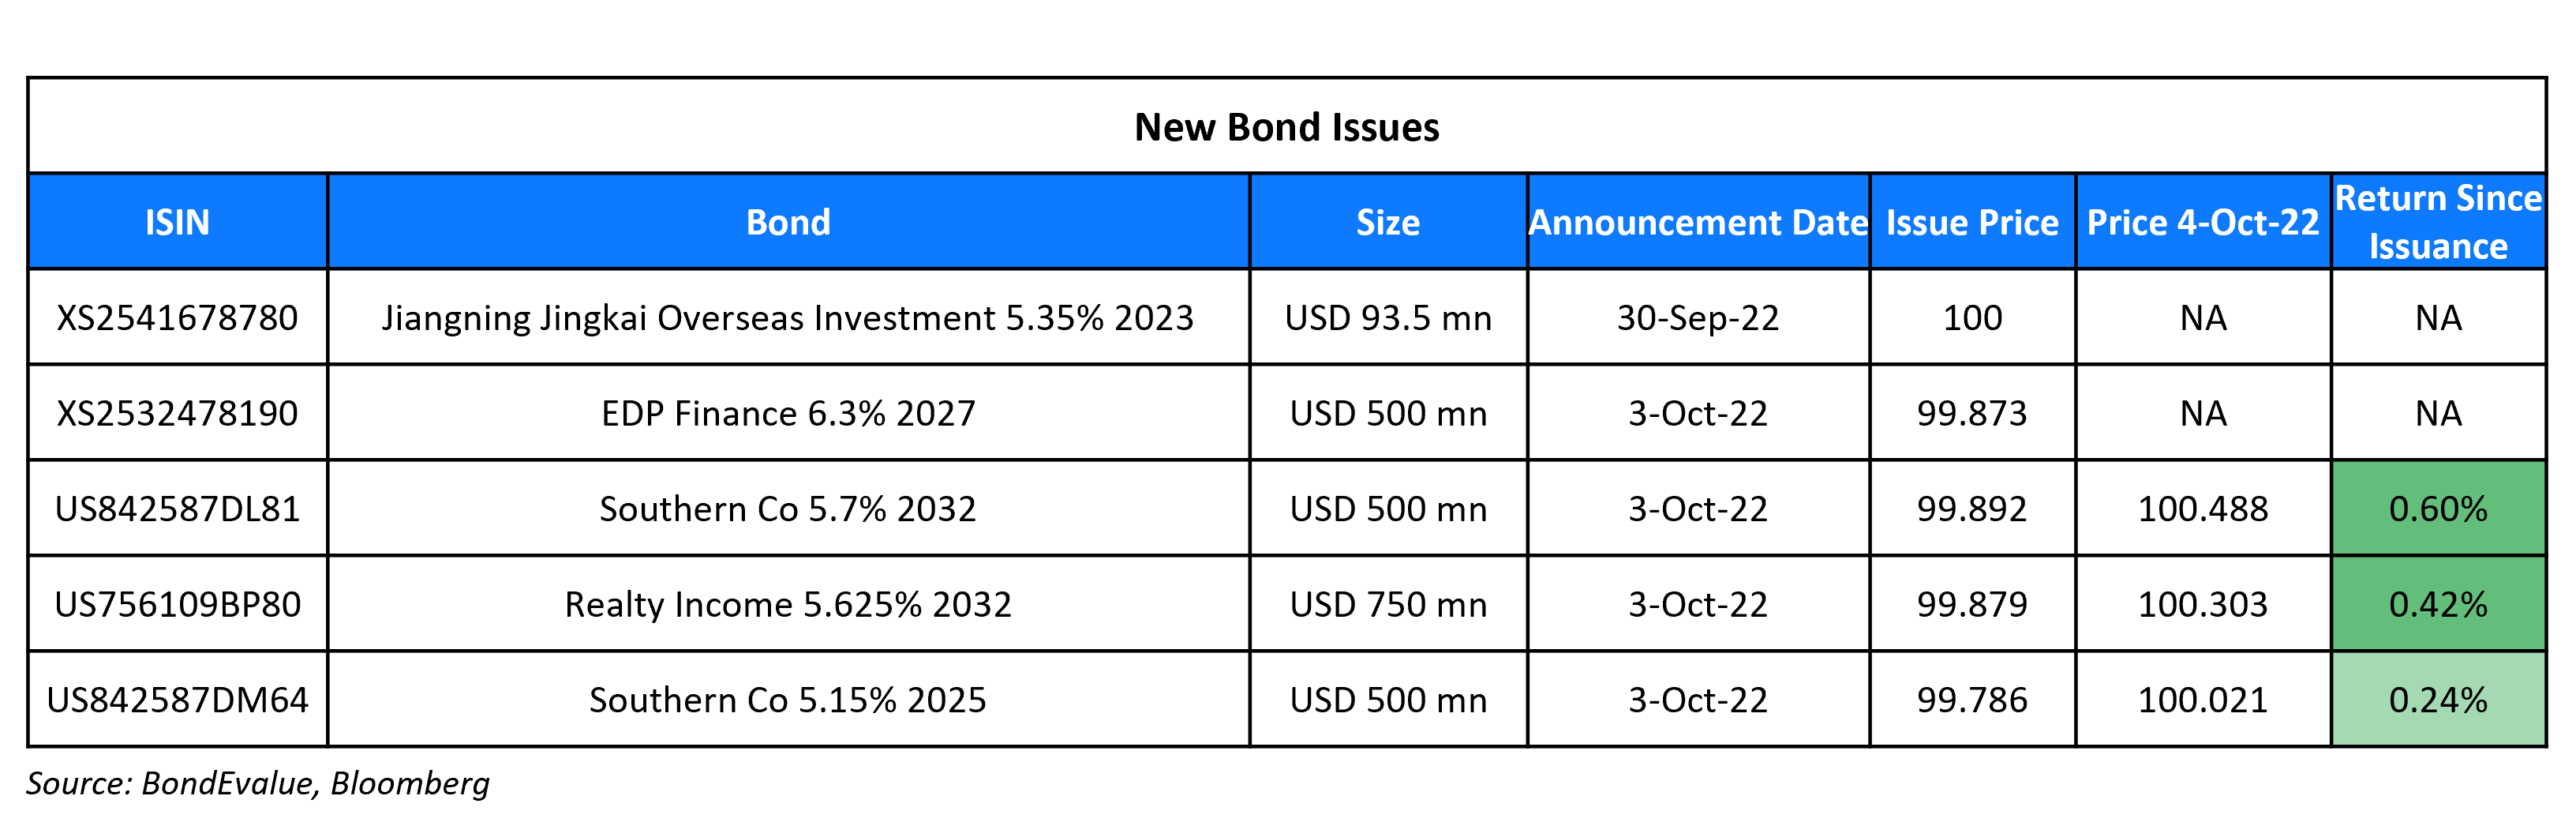 New Bond Issues 4 Oct 22